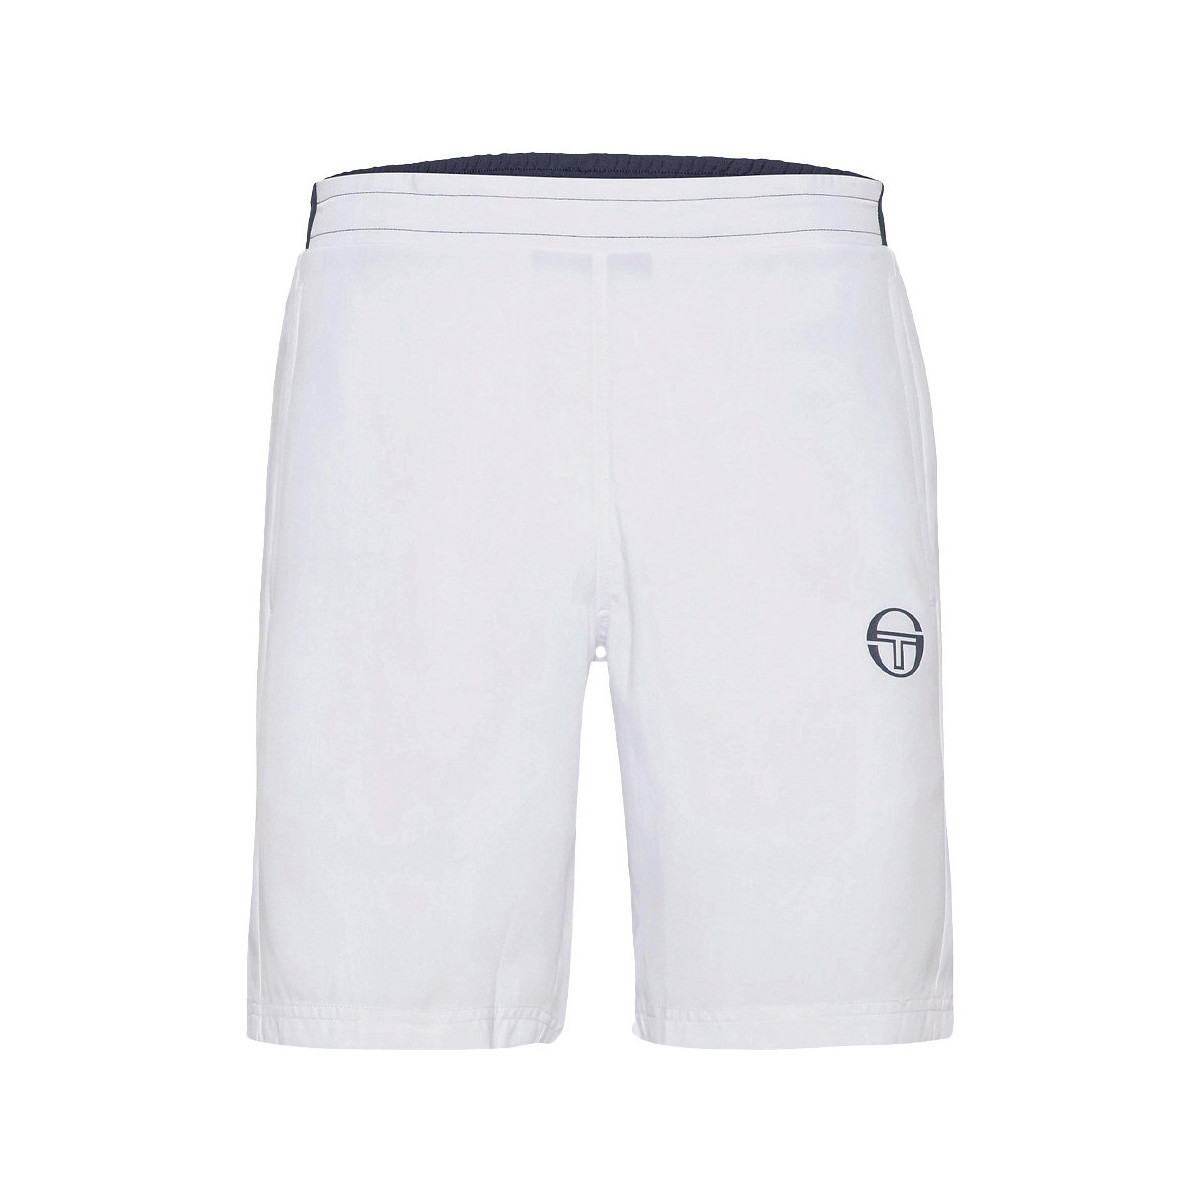 Vêtements Garçon Shorts / Bermudas Sergio Tacchini 36845 -000 Blanc